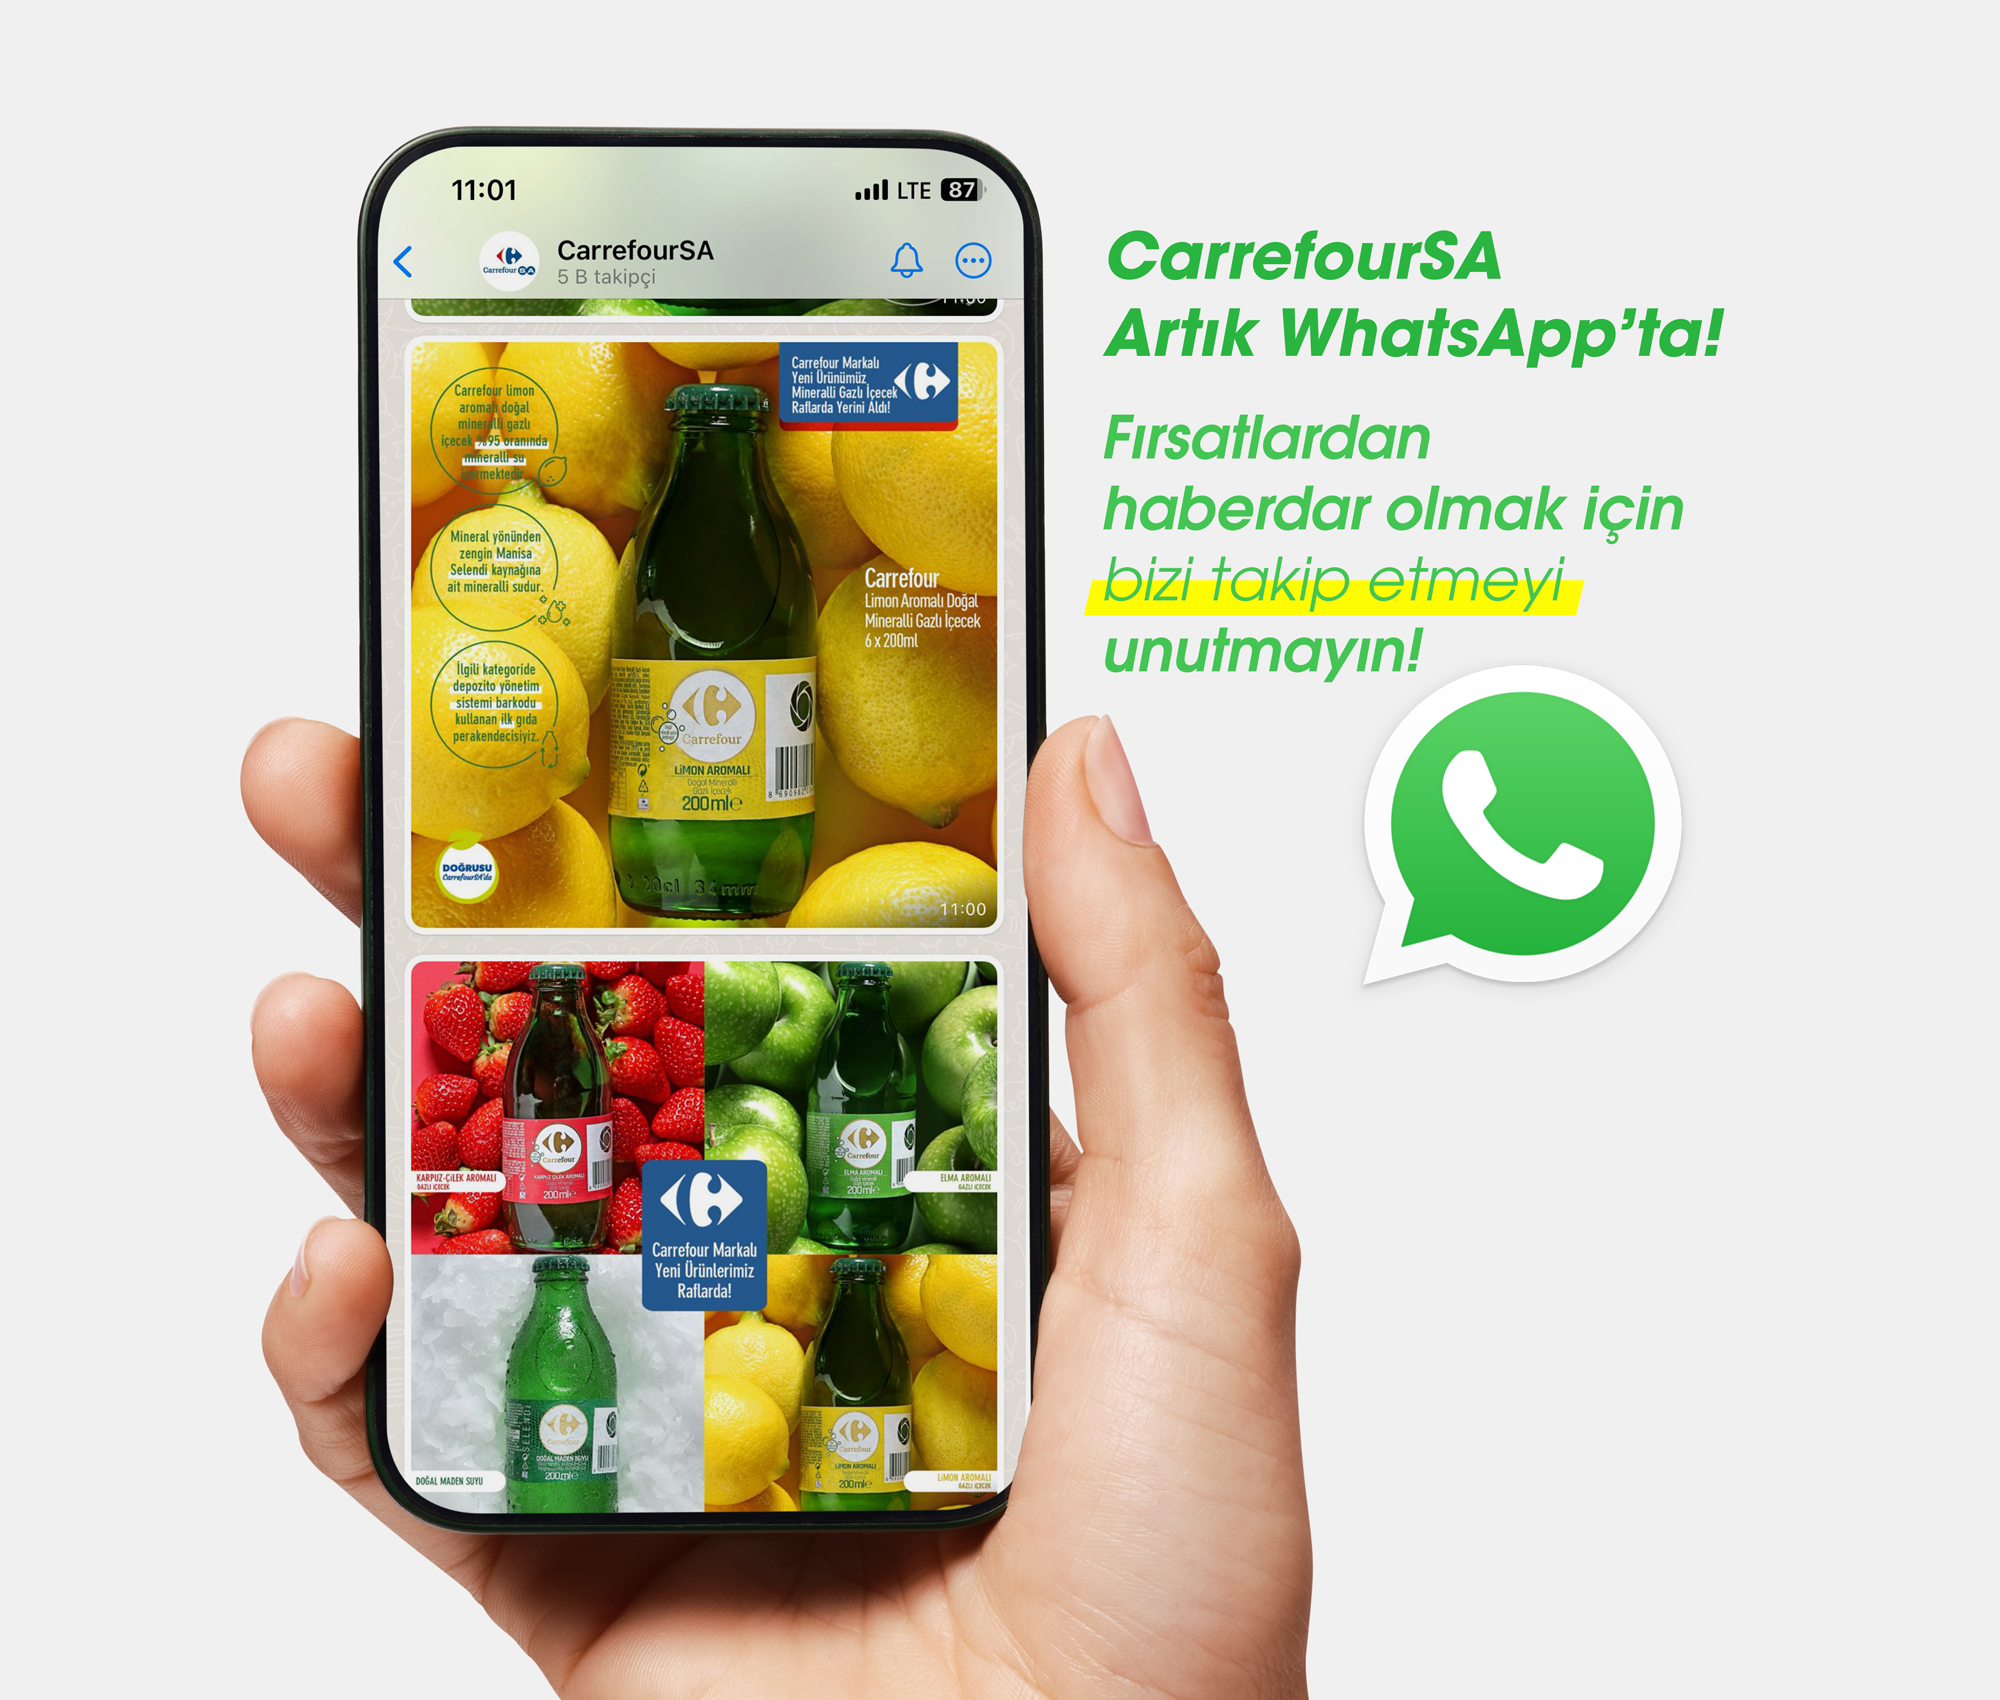 CarrefourSA Artık WhatsApp'ta!